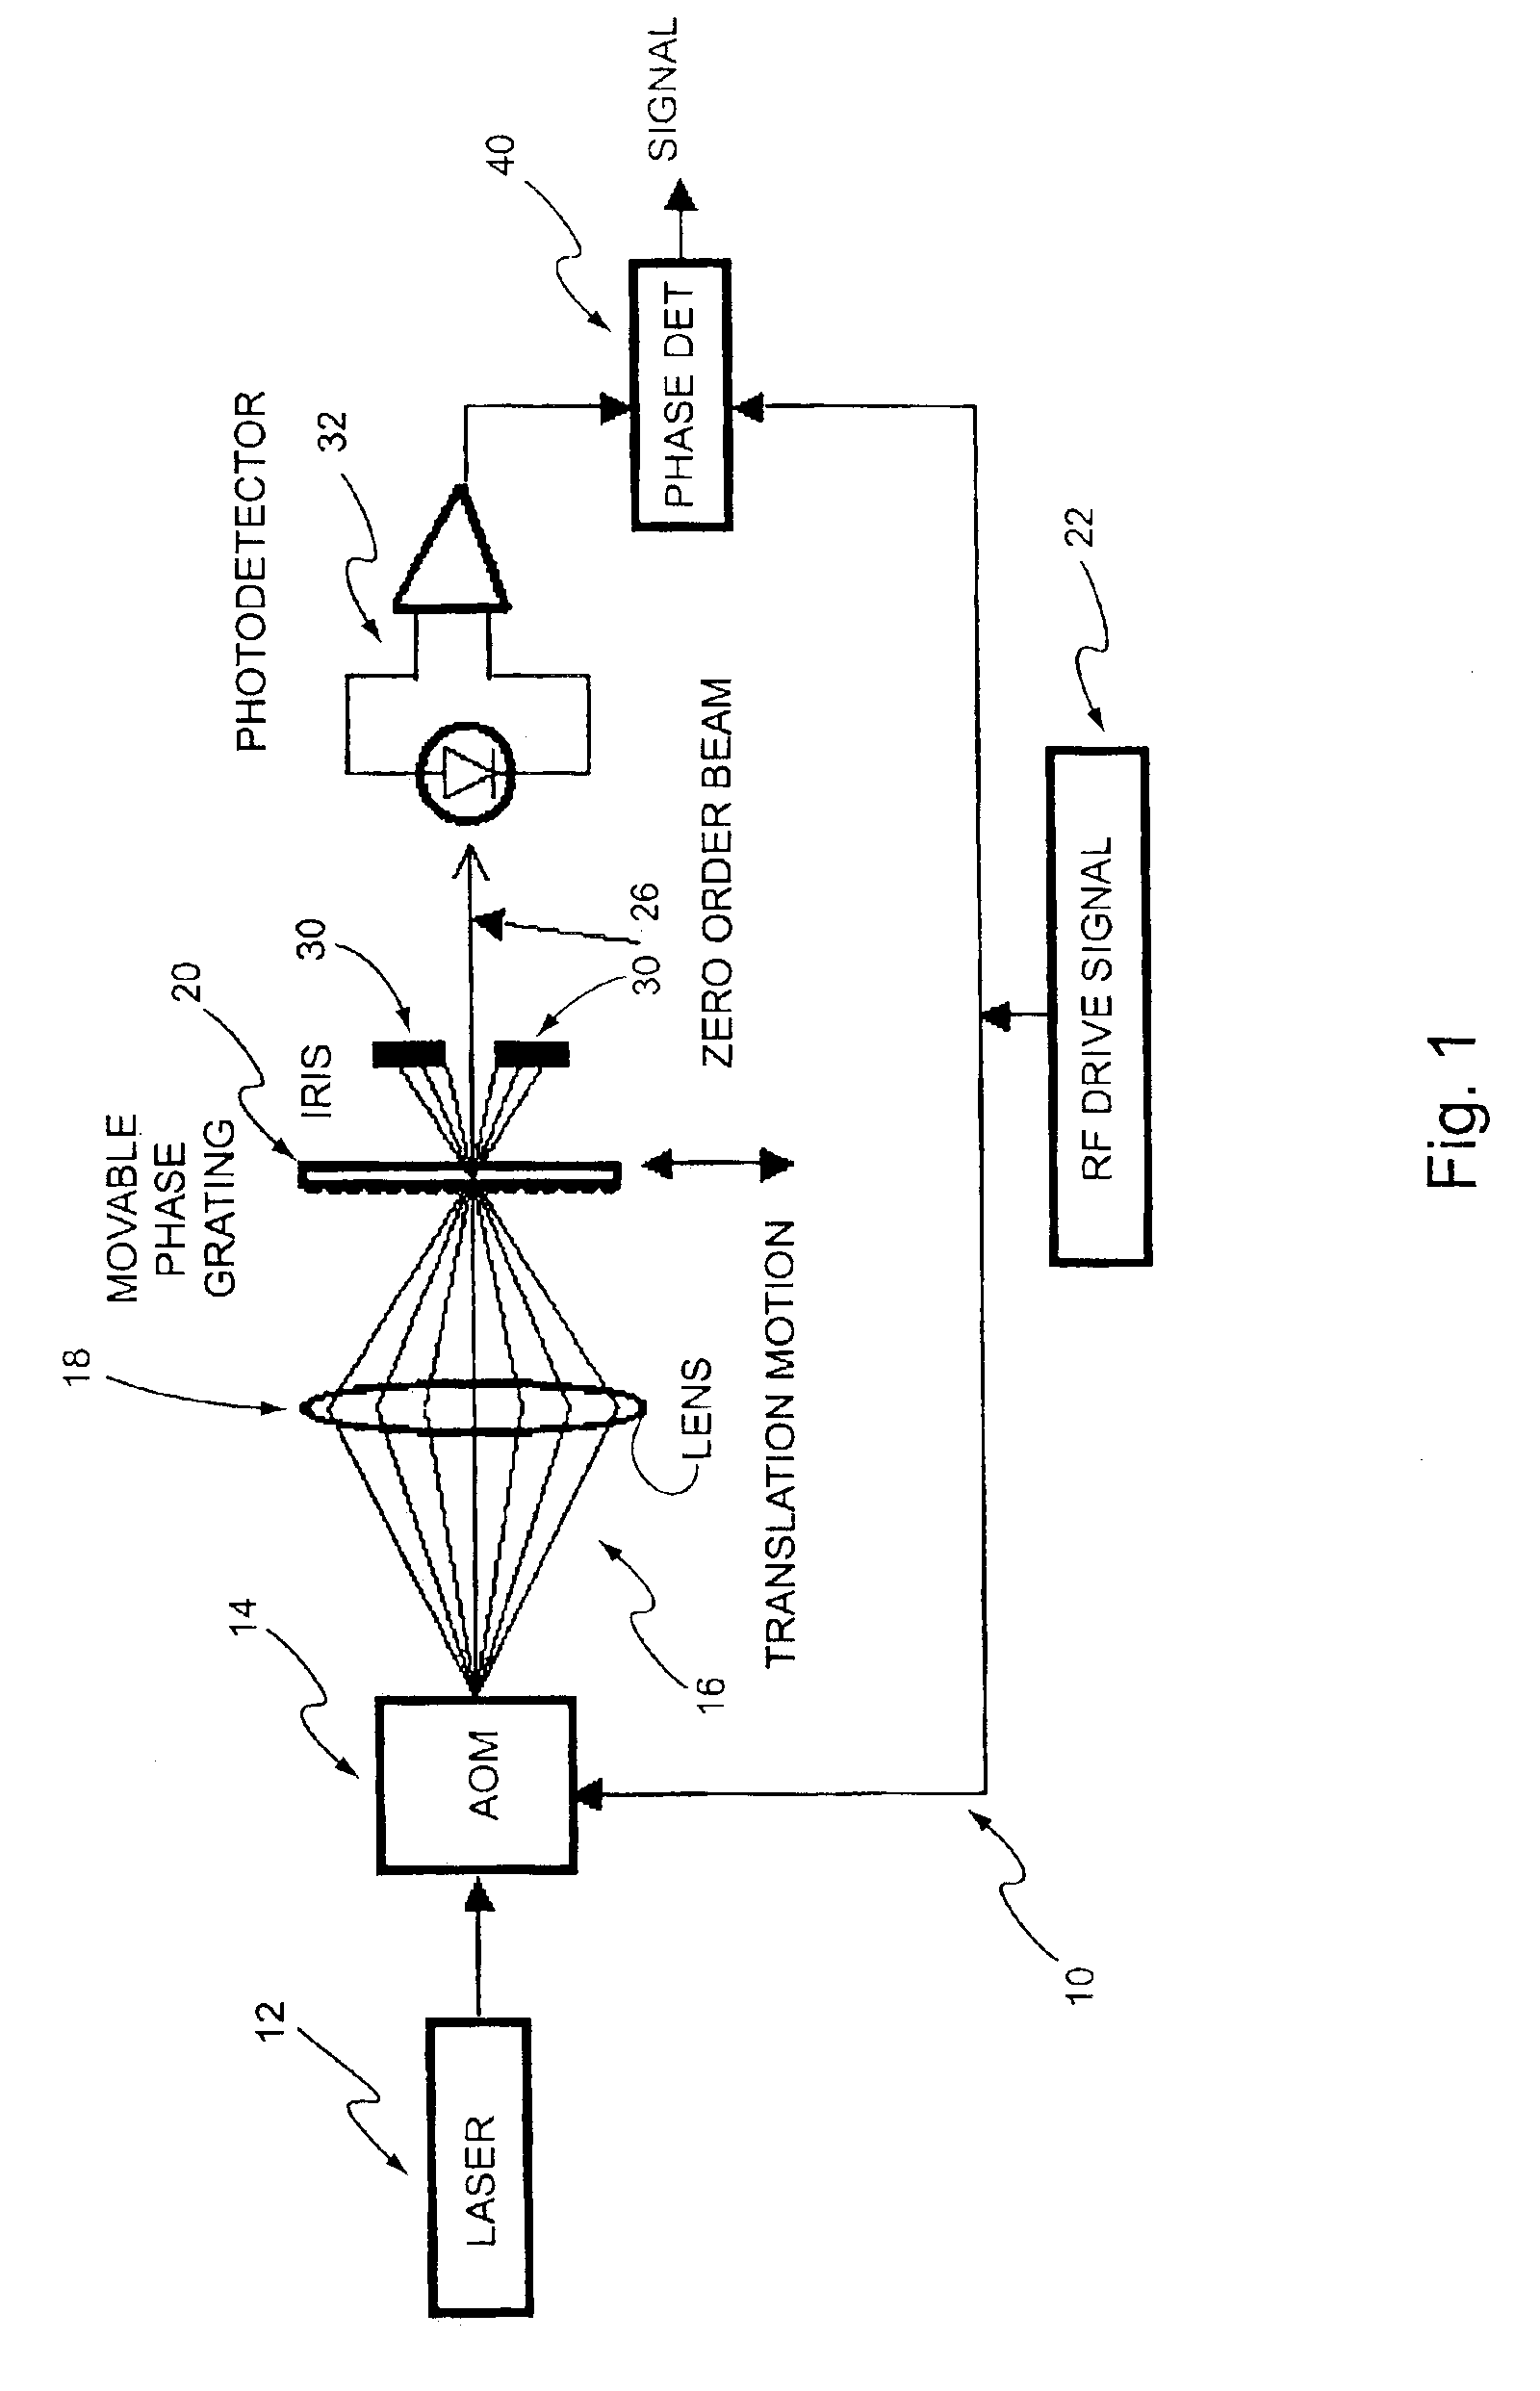 Heterodyne lateral grating interferometric encoder